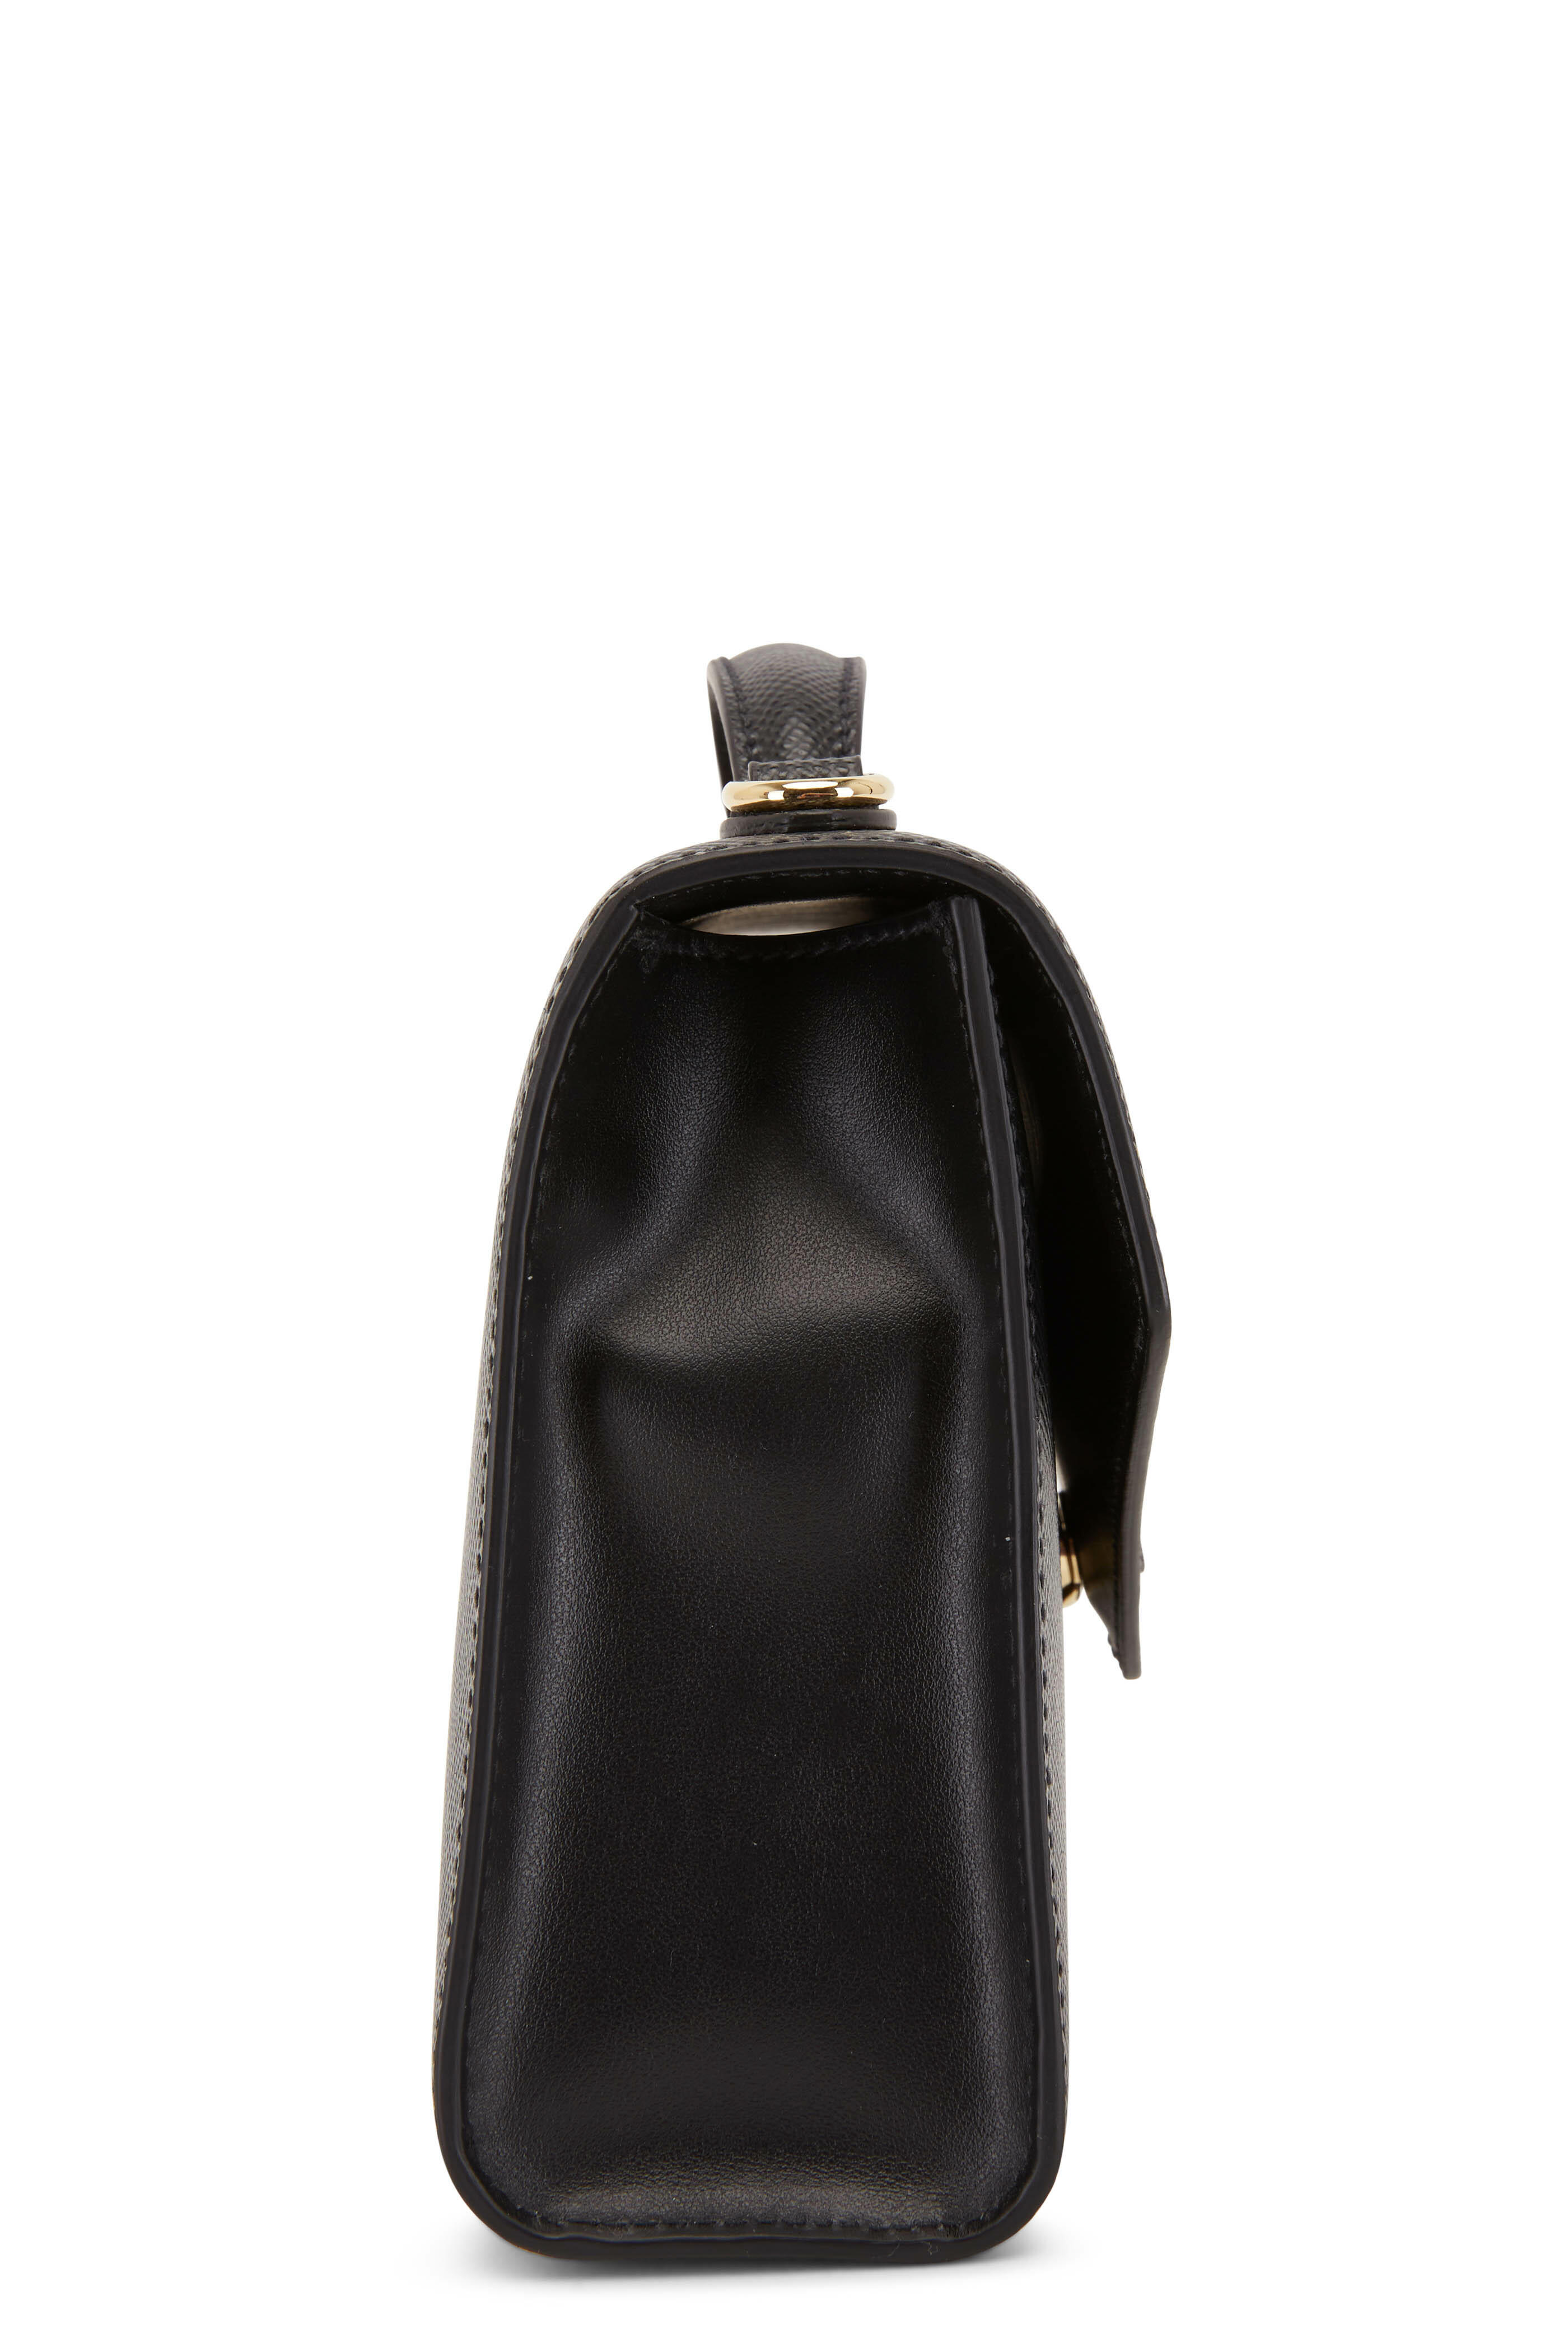 Prada Women's Black Saffiano Leather Zip Pouch Shoulder Bag | by Mitchell Stores